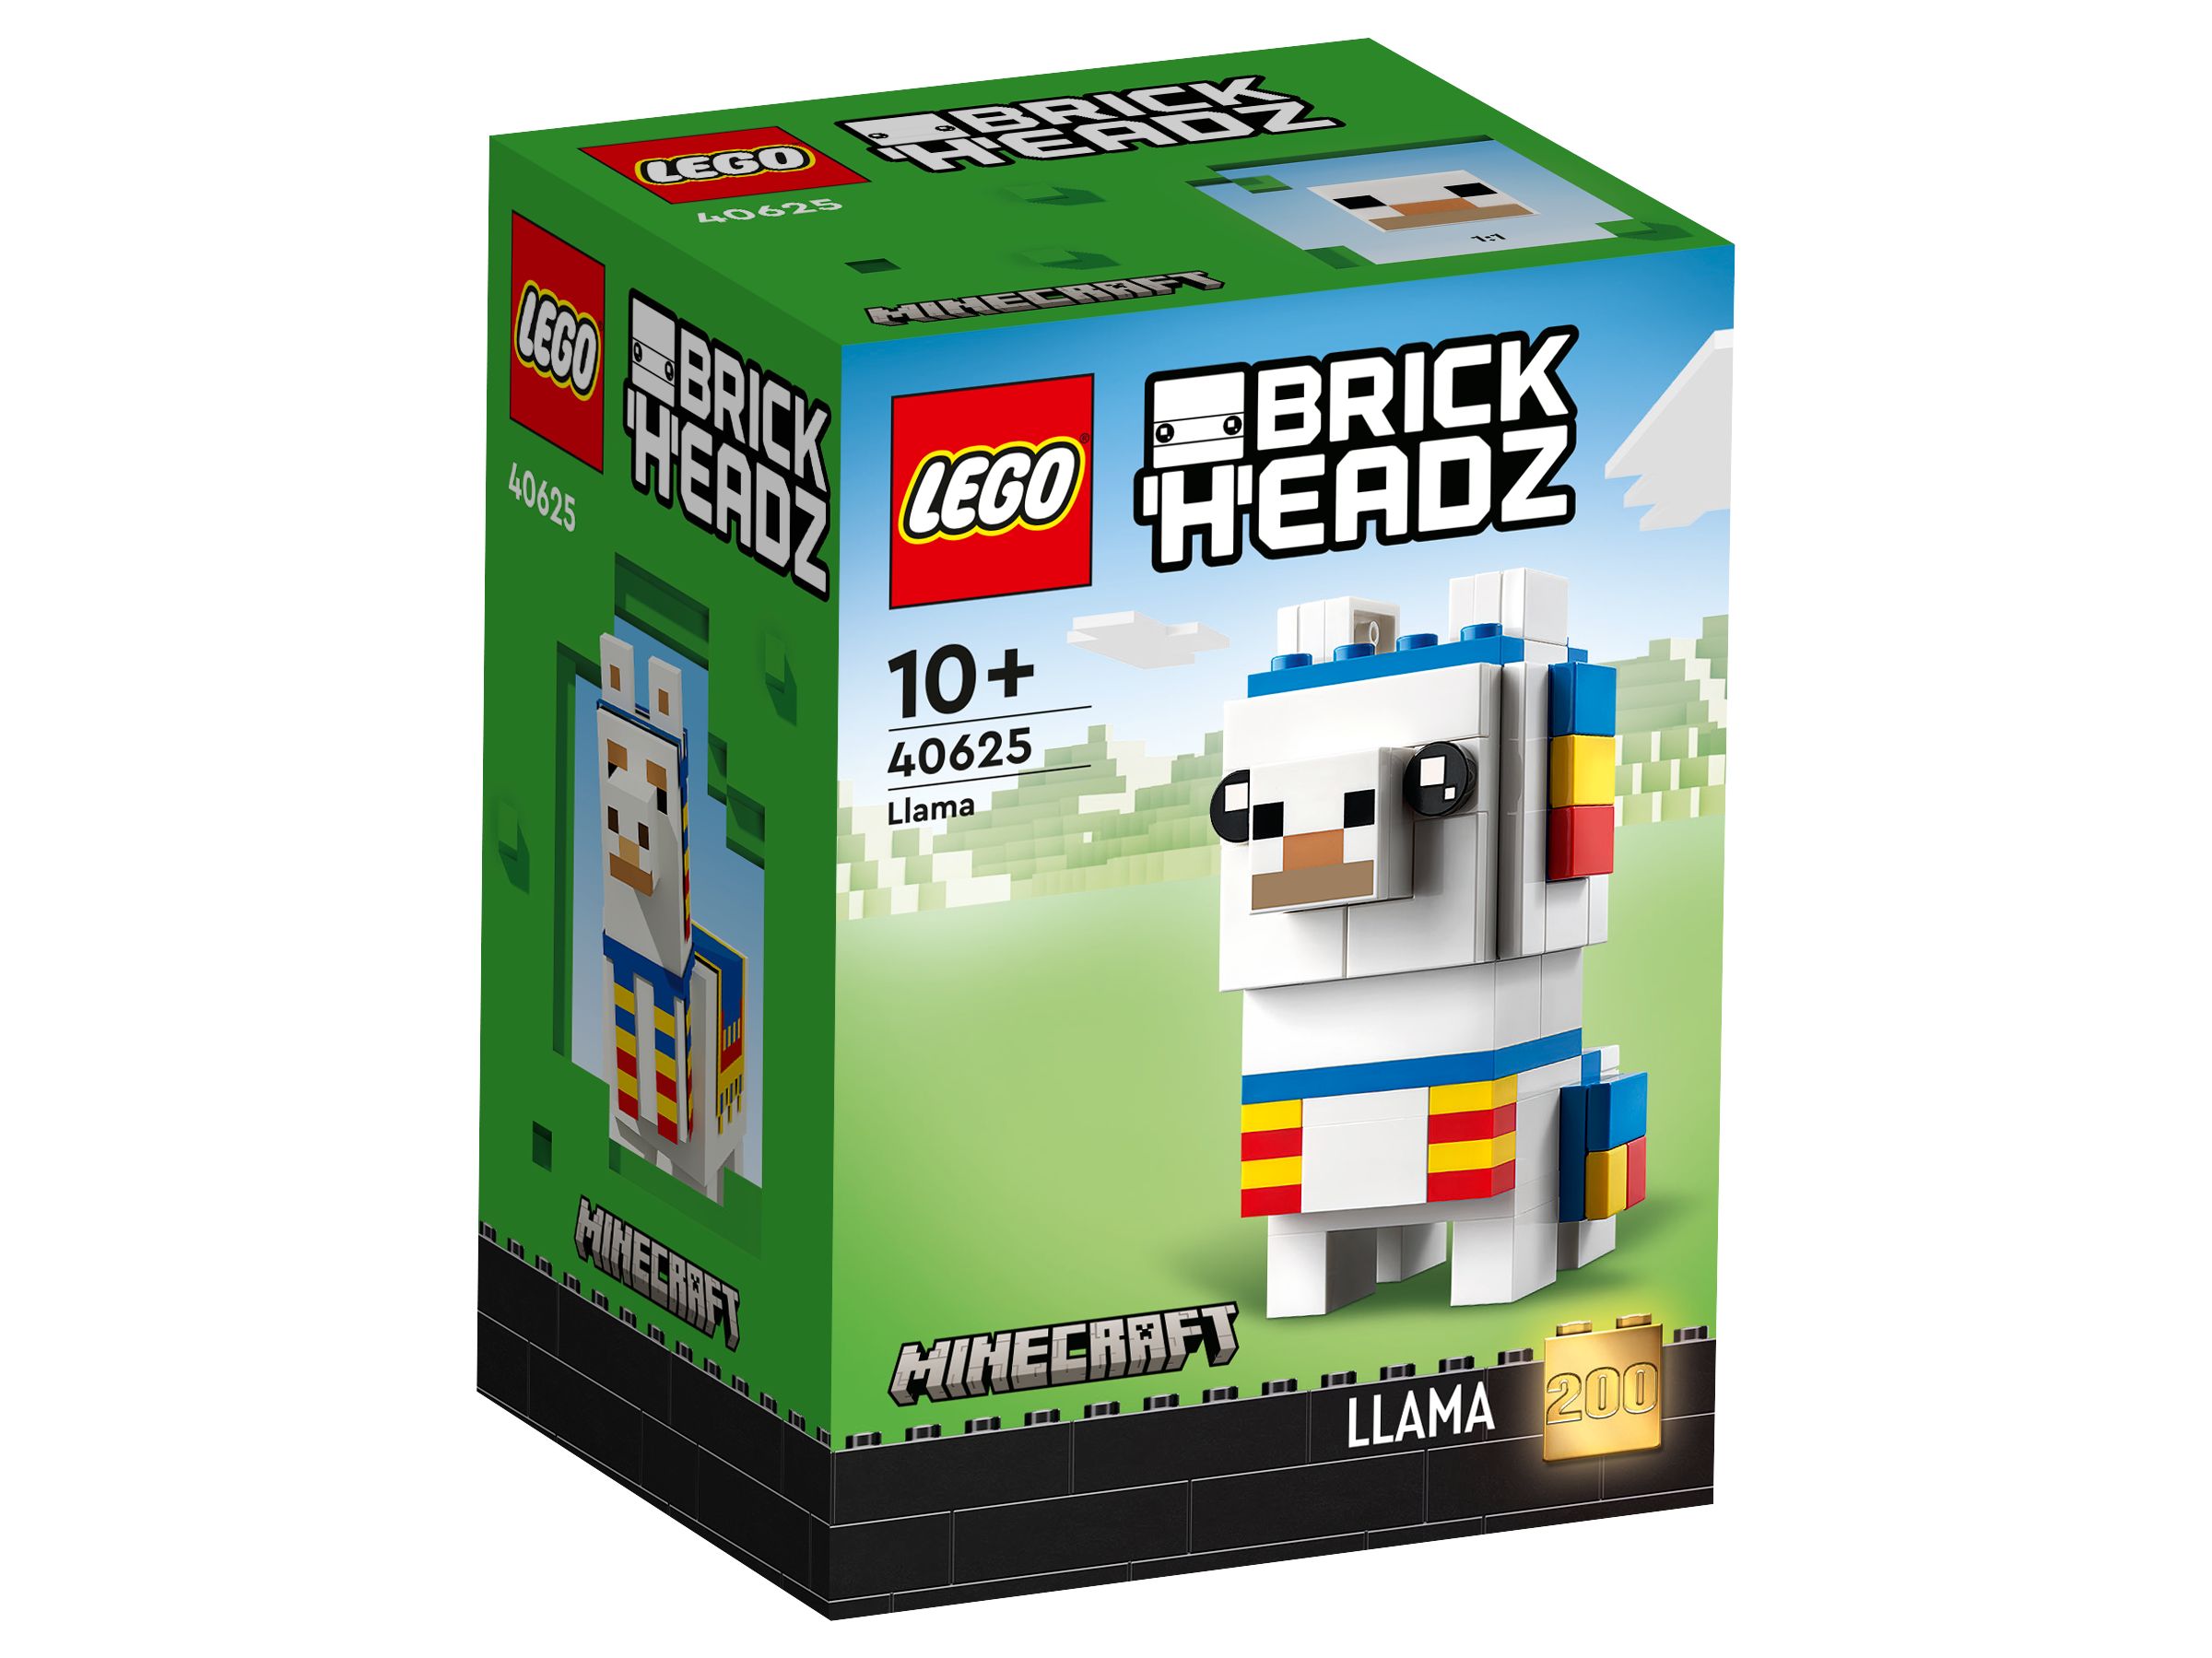 LEGO BrickHeadz 40625 Lama LEGO_40625_Box1_v29.jpg